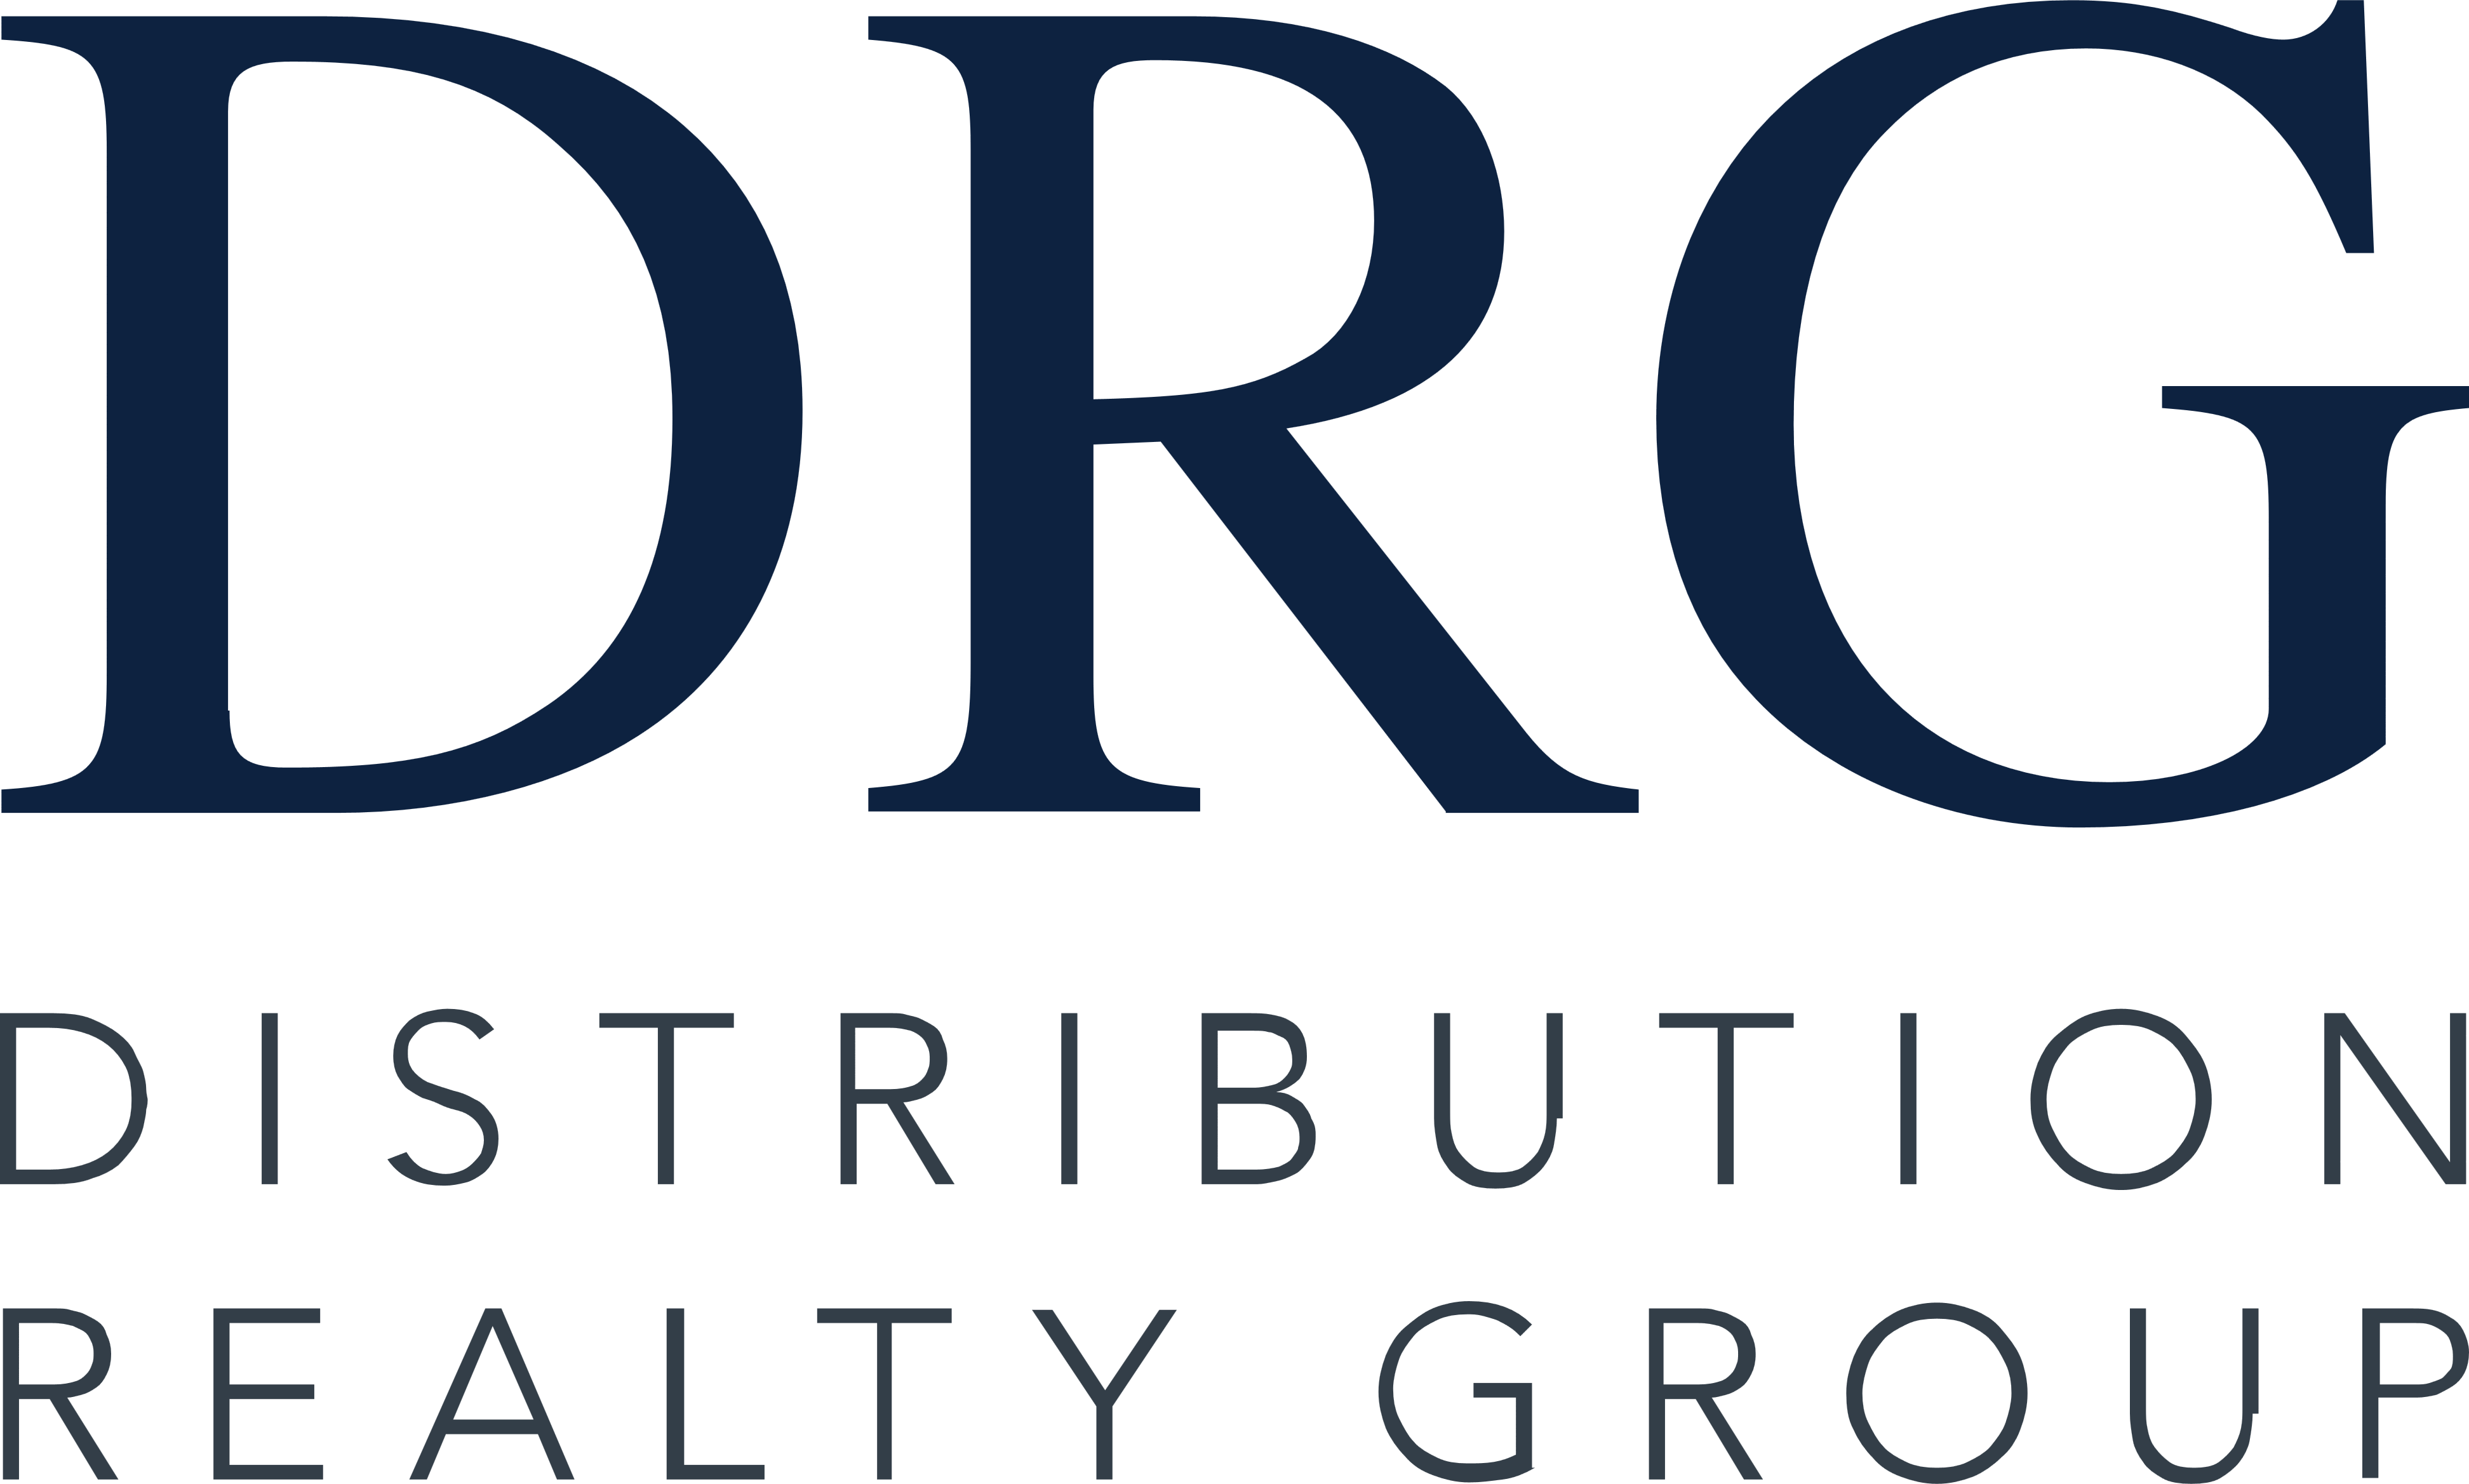 DRG Logo - DRG (Distribution Realty Group) – Logos Download